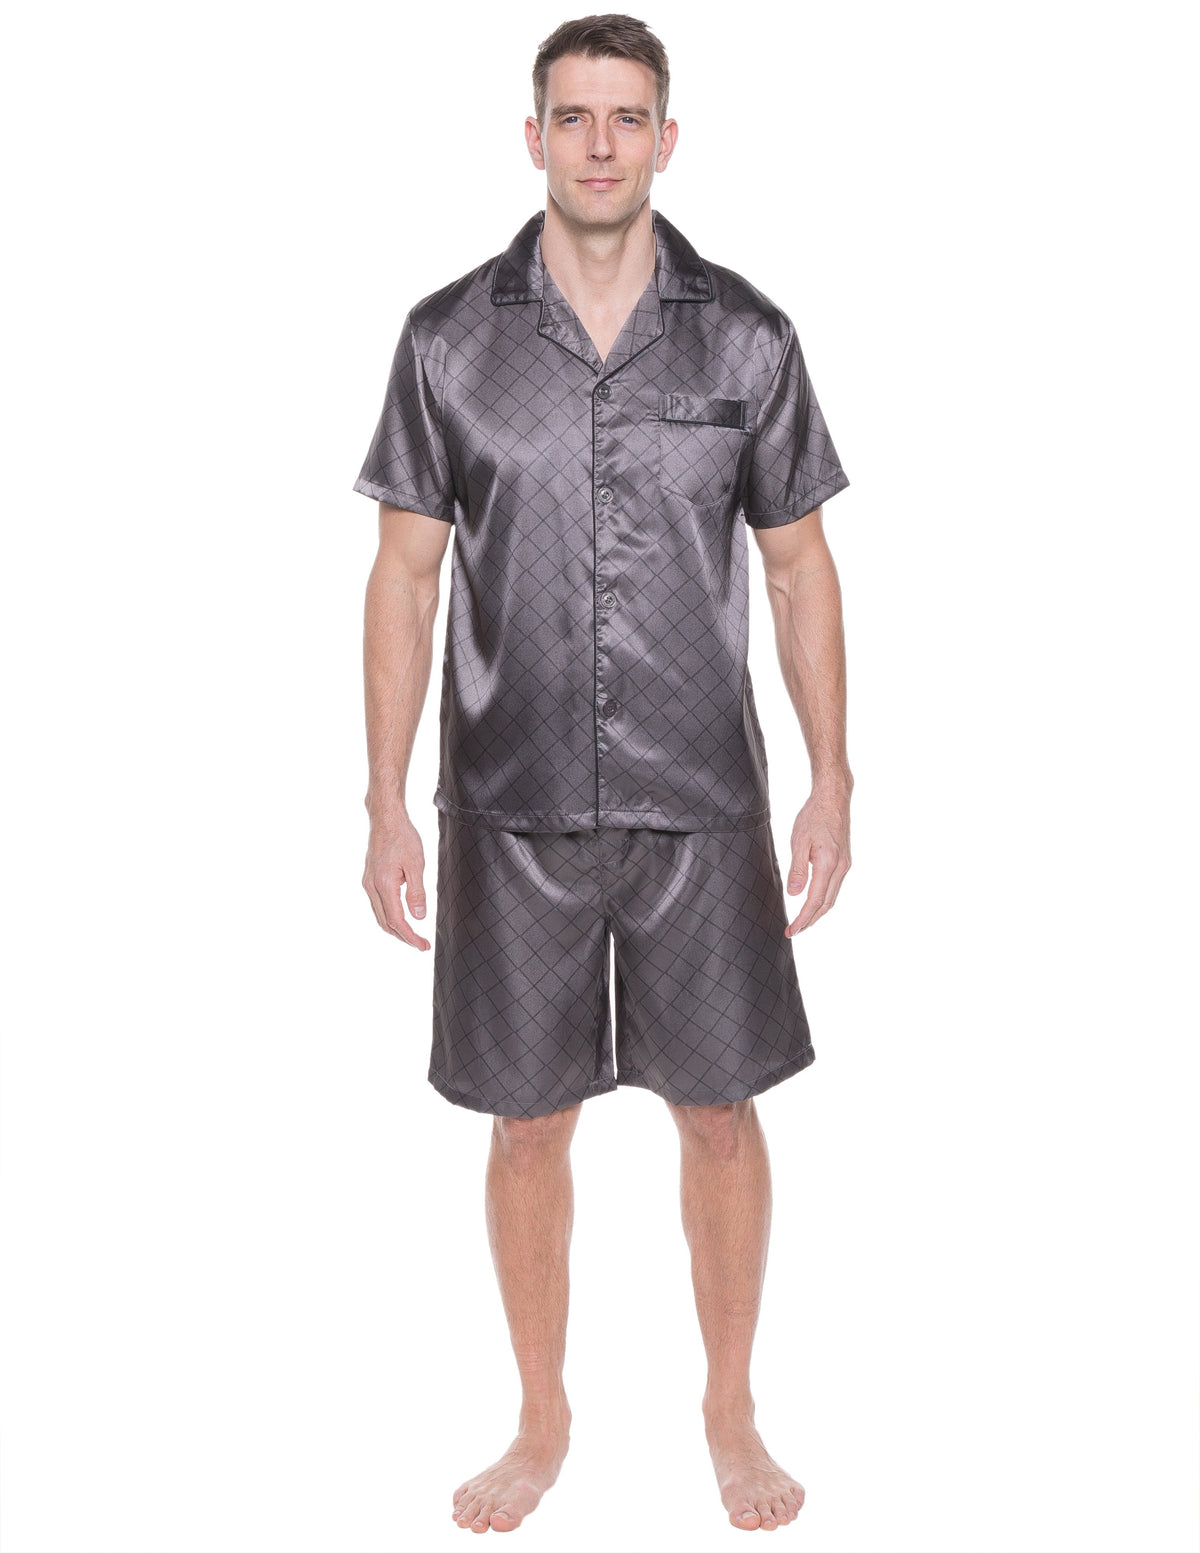 Mens Satin Short Sleepwear/Pajama Set - Diamond Windowpane Charcoal